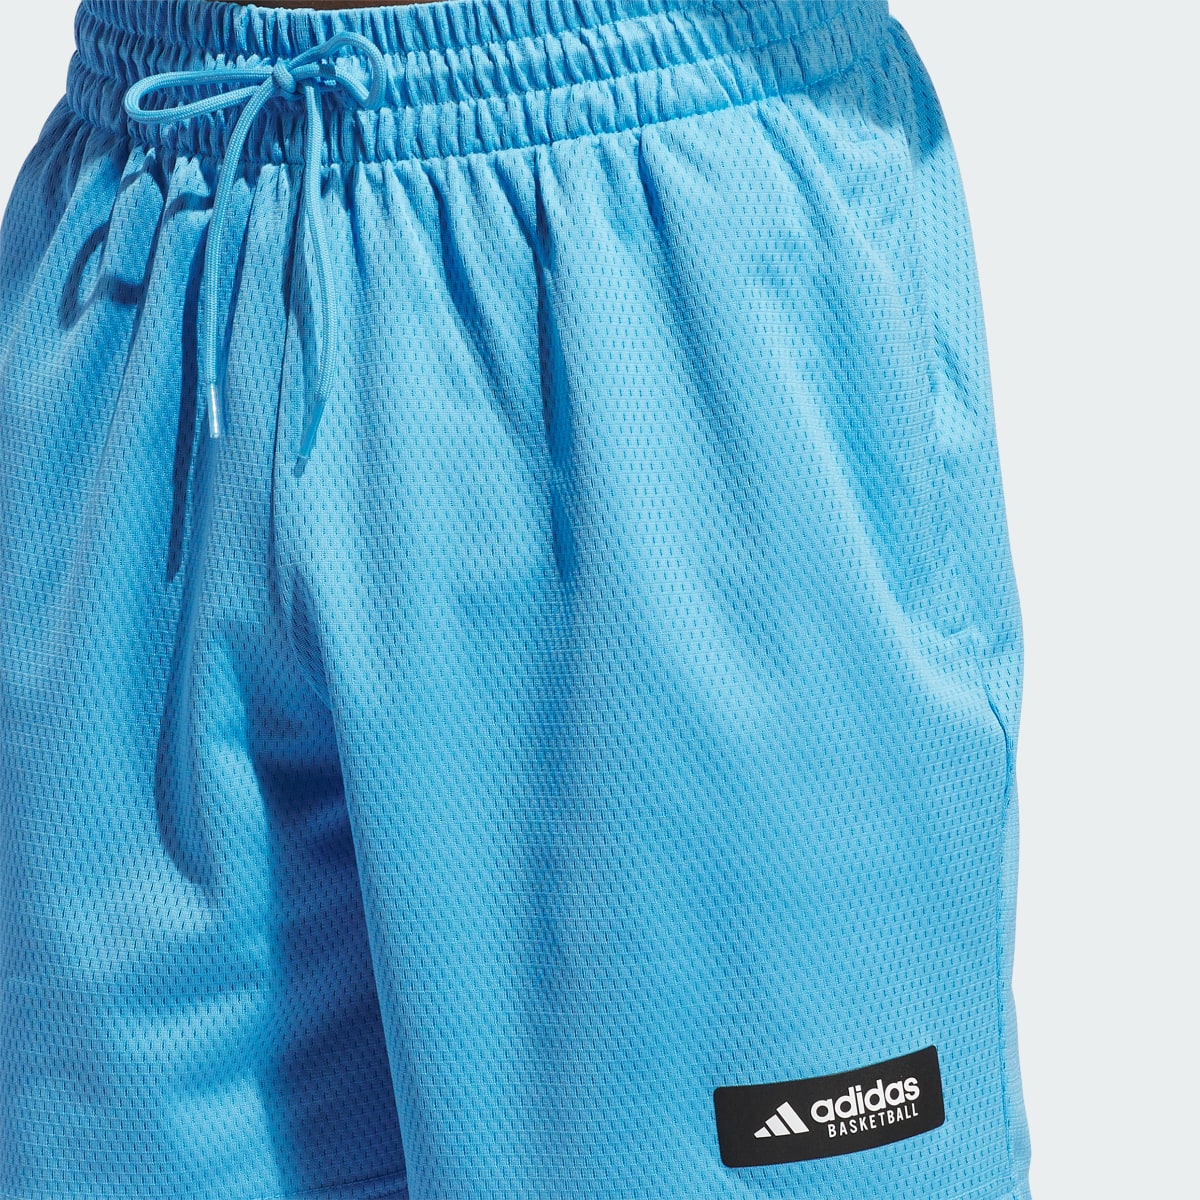 Adidas Legends Shorts. 4